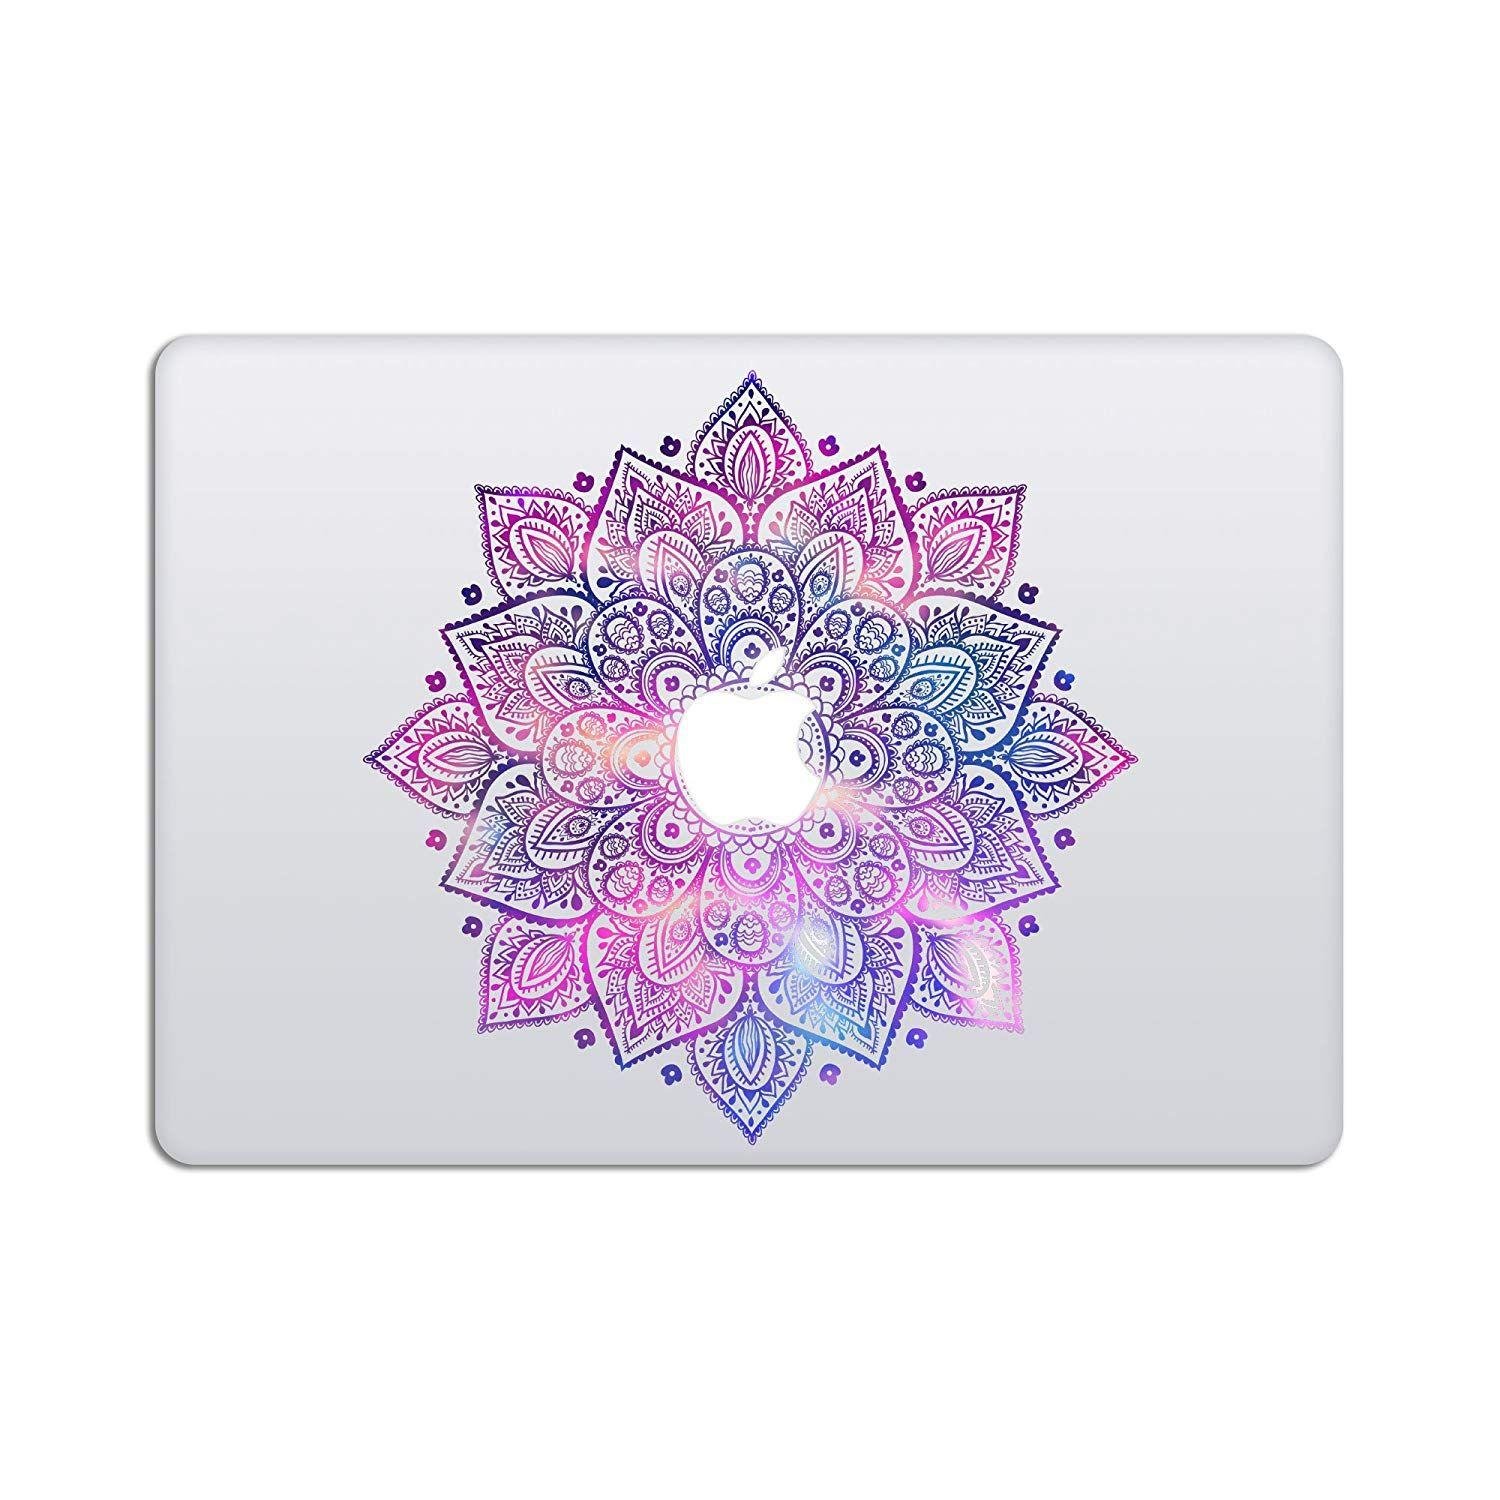 Purple Apple Logo - Amazon.com: Laptop Stickers MacBook Decal - Removable Vinyl w ...